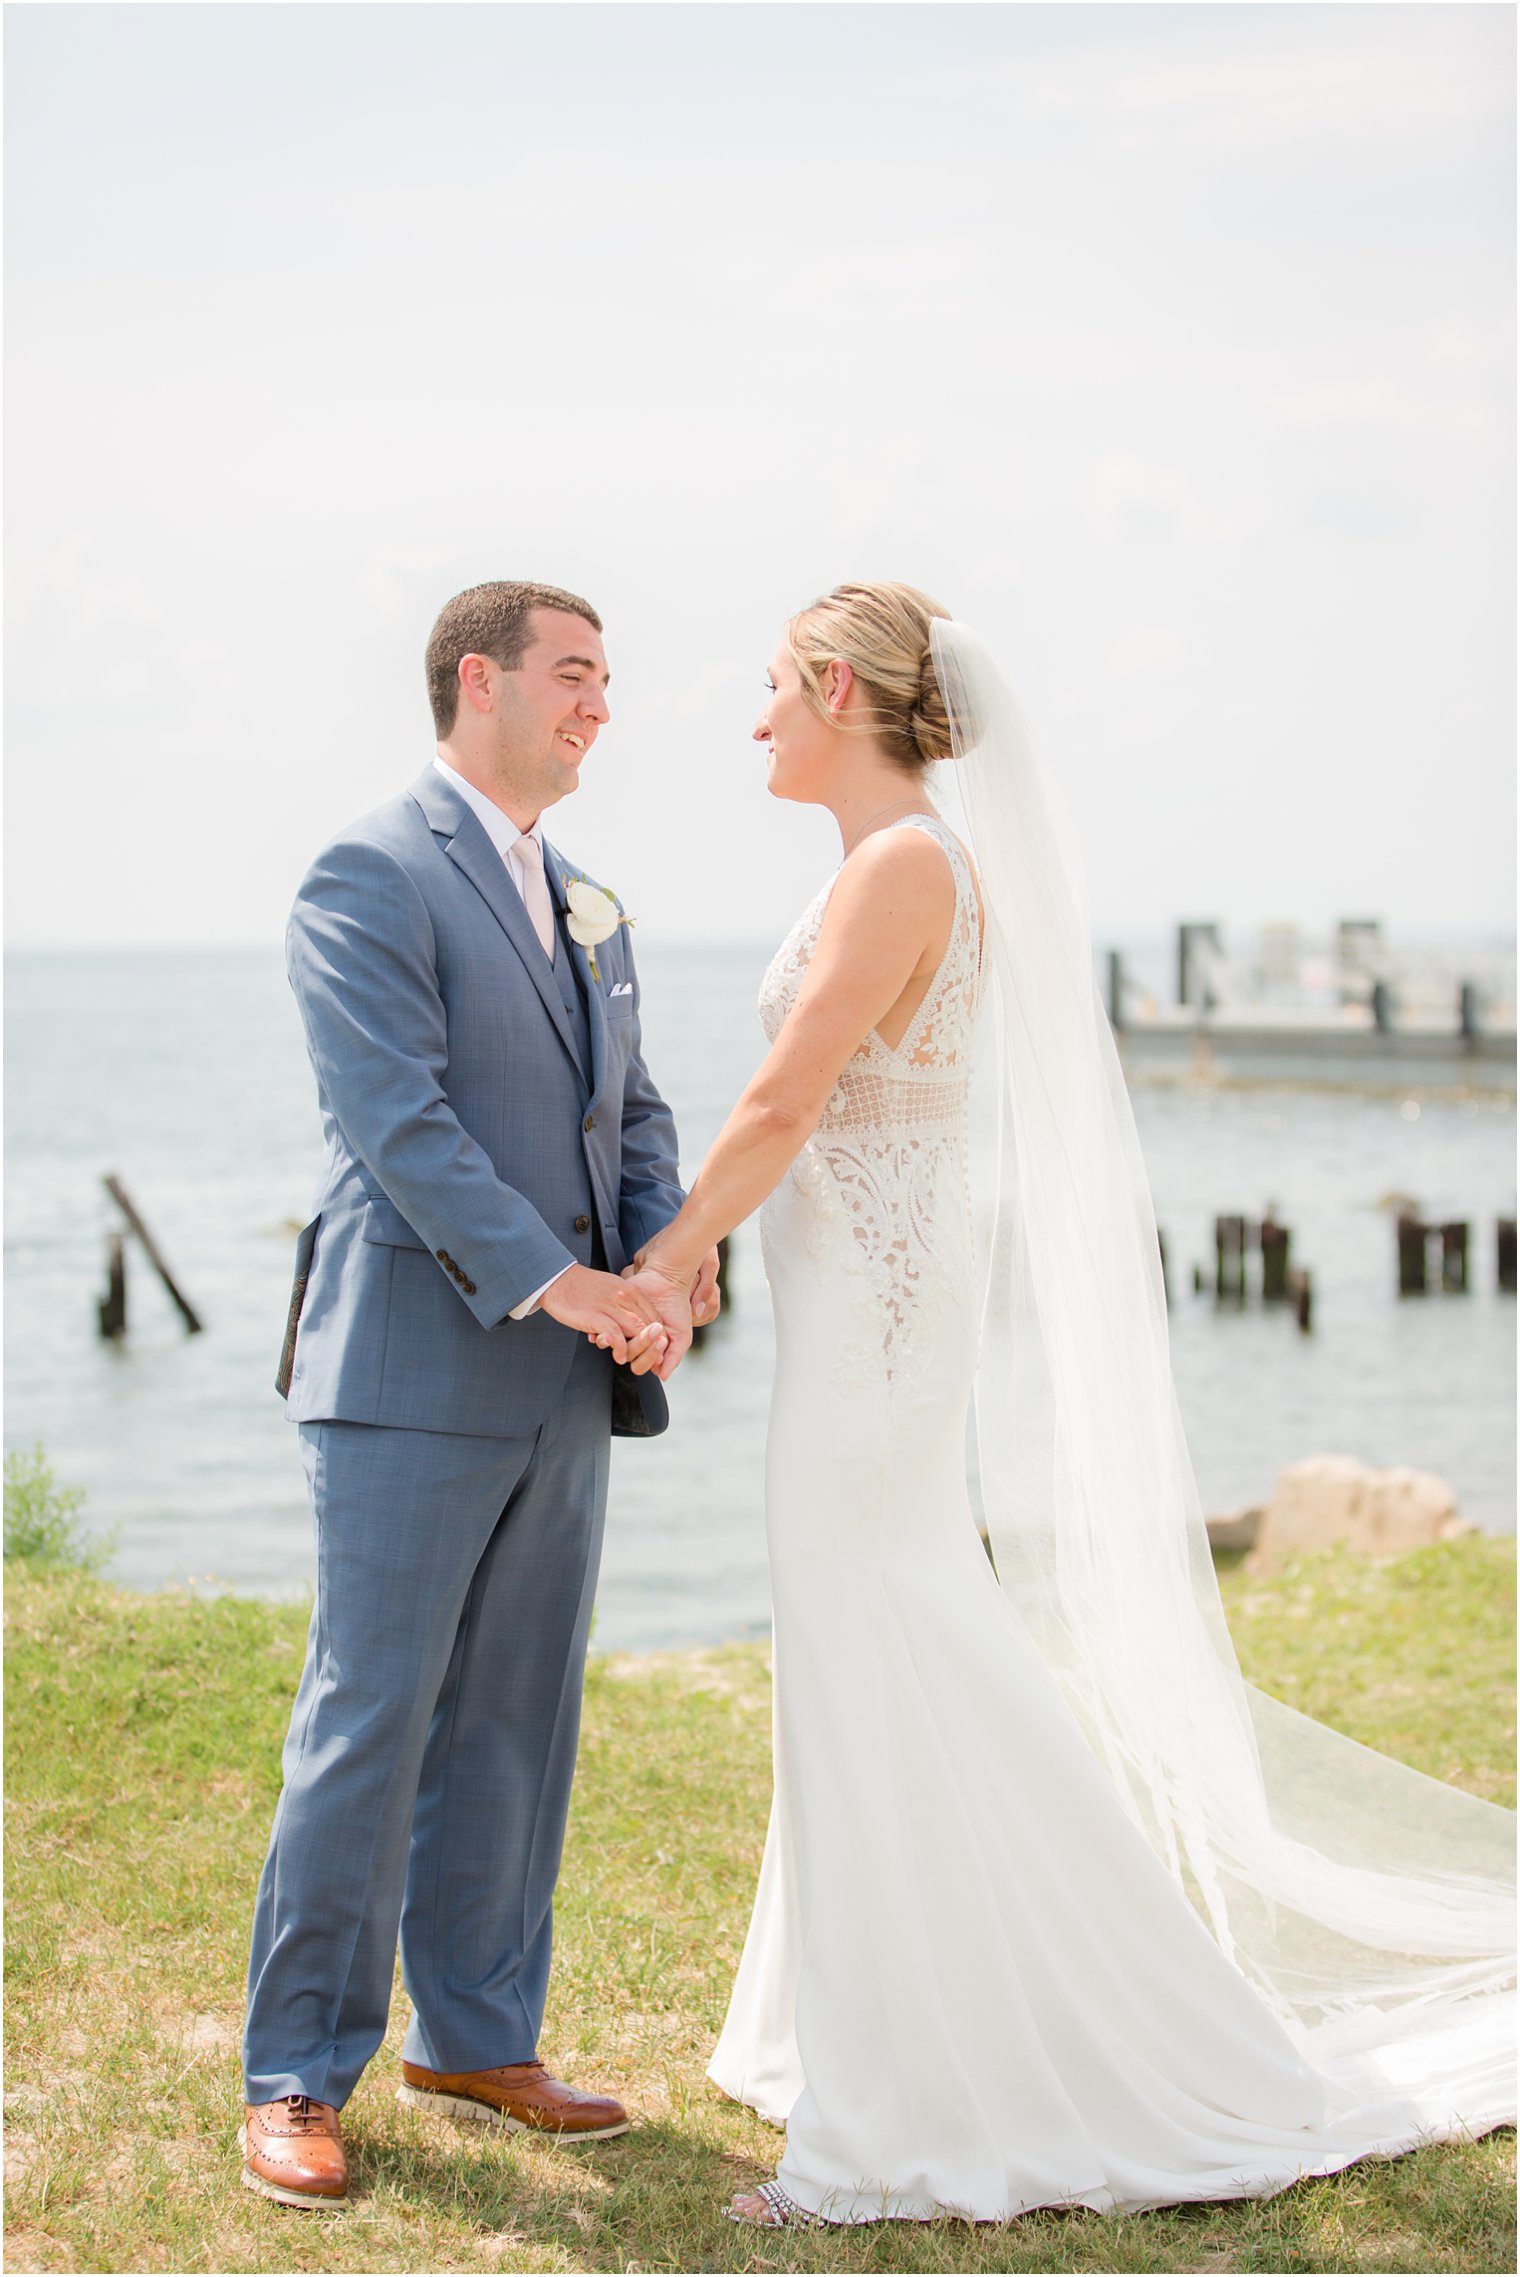 Sandy Hook Chapel wedding day photographed by New Jersey photographer Idalia Photography